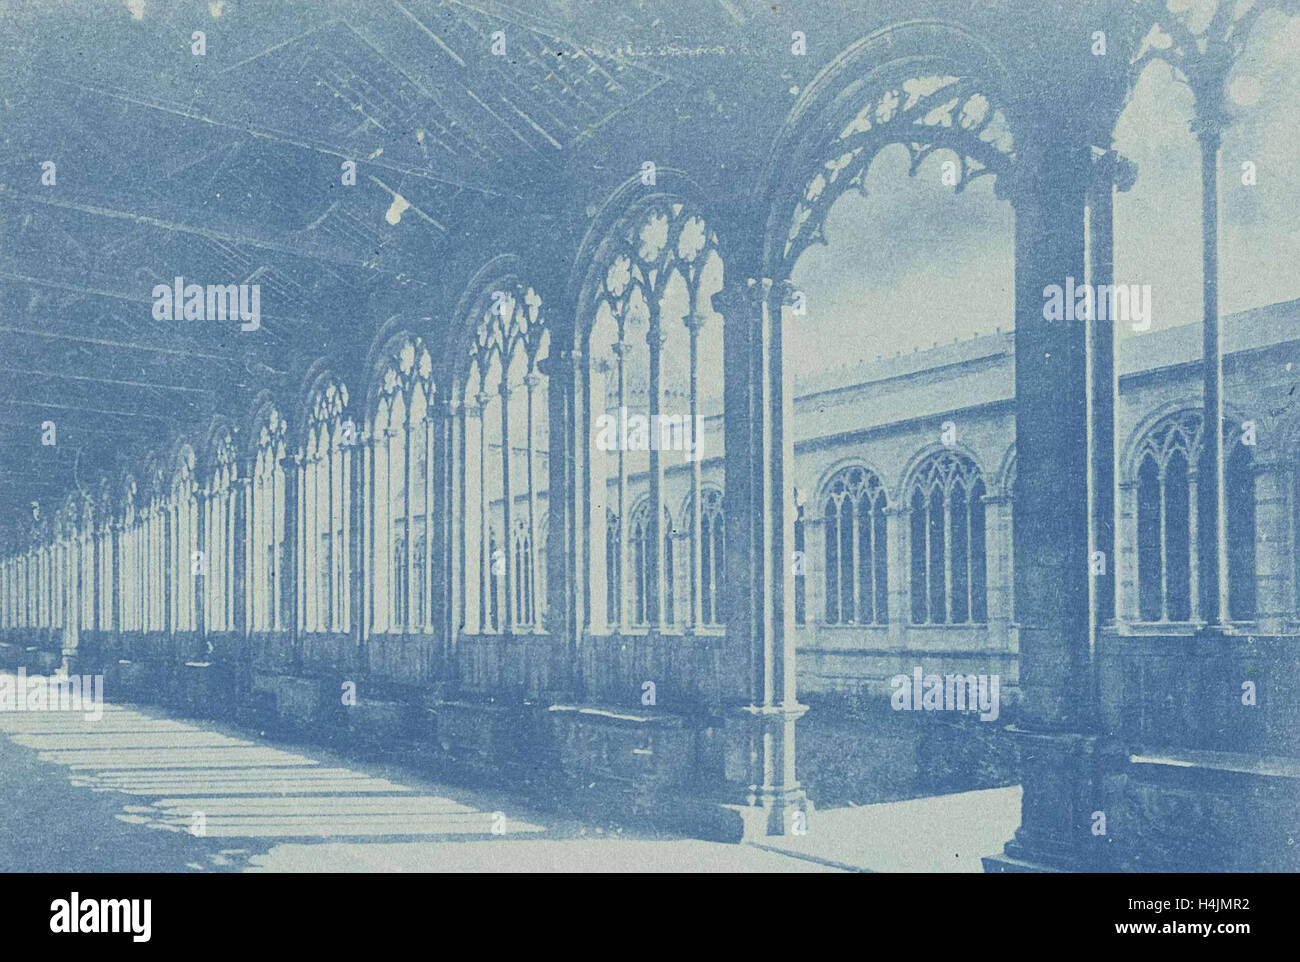 Handhabung, Camposanto, Pisa, Italien, anonym, um 1900 - 1925, c. Cyanotypie Stockfoto